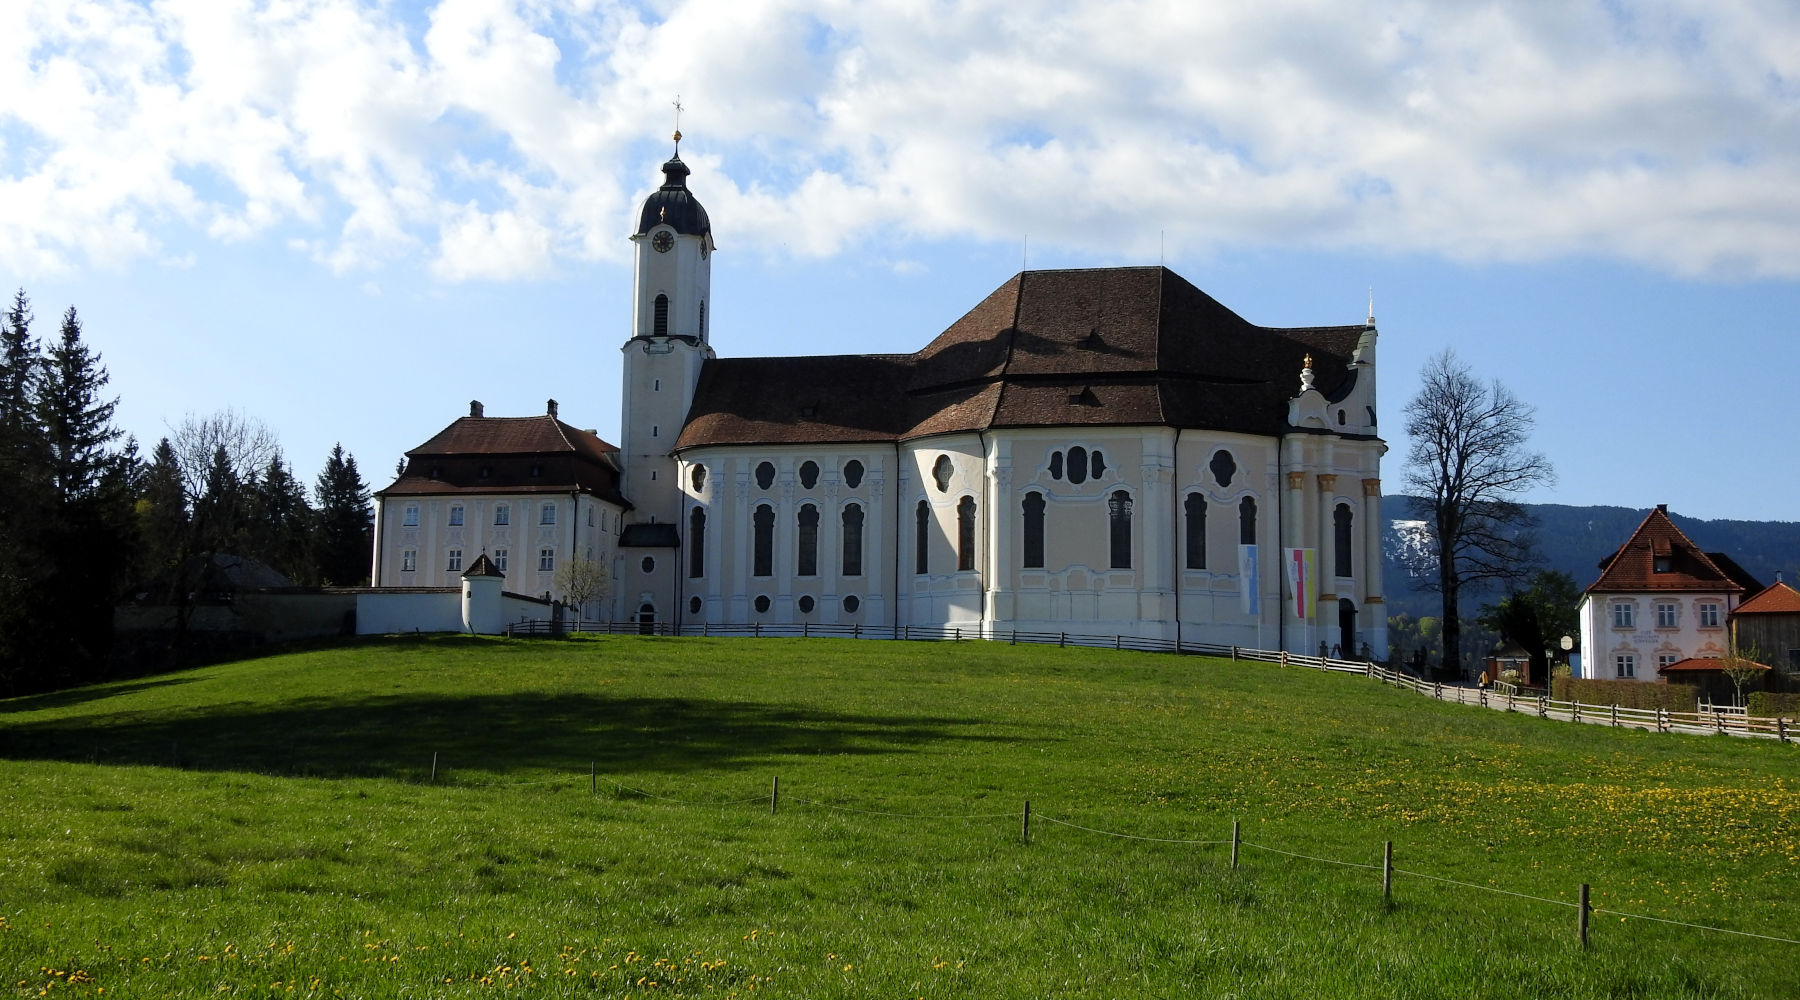 Wieskirche Church